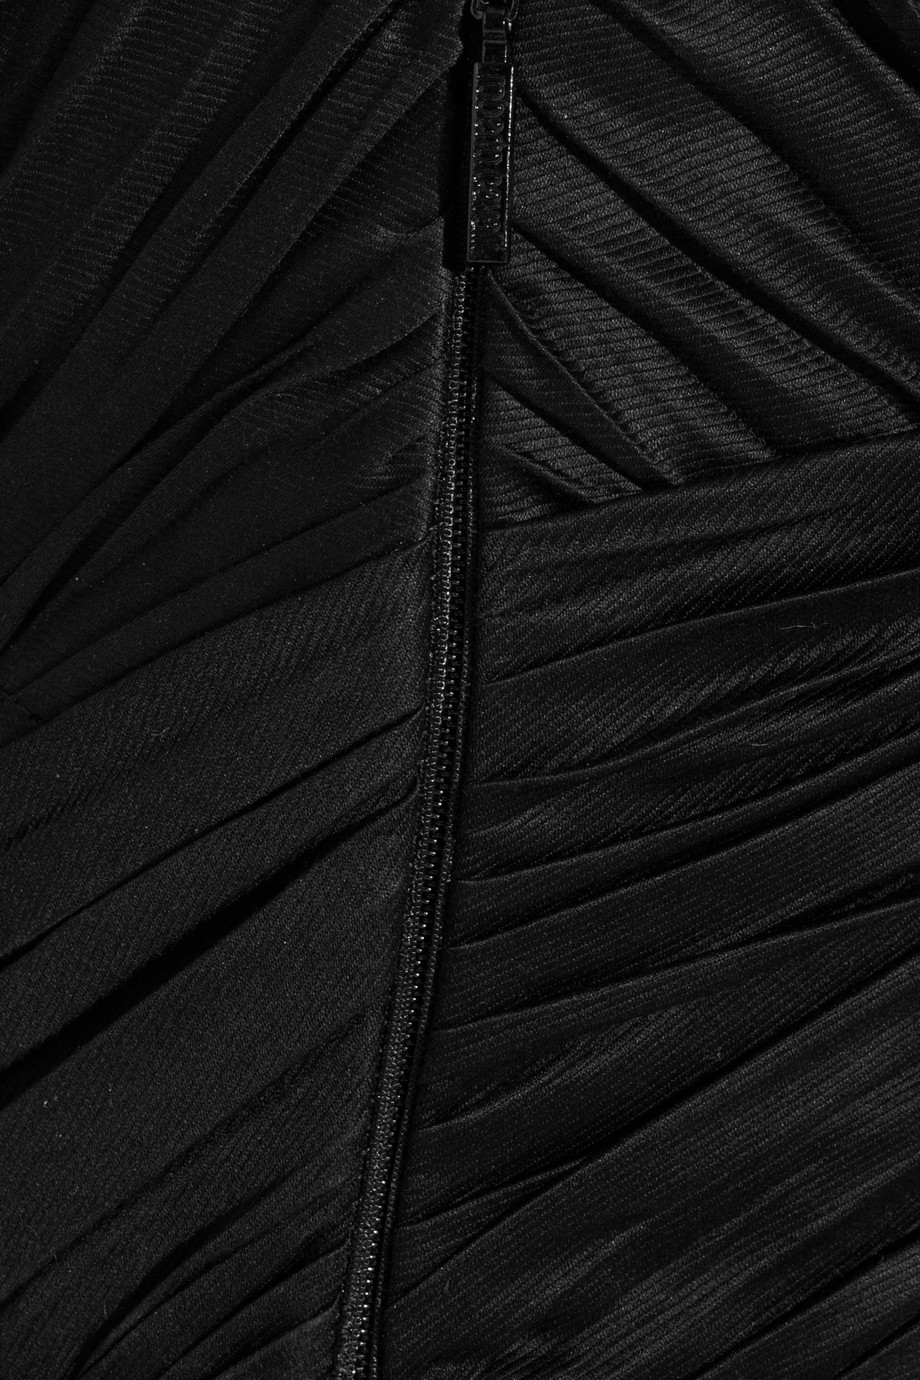 Lyst - Roberto Cavalli Pleated Cotton-blend Dress in Black